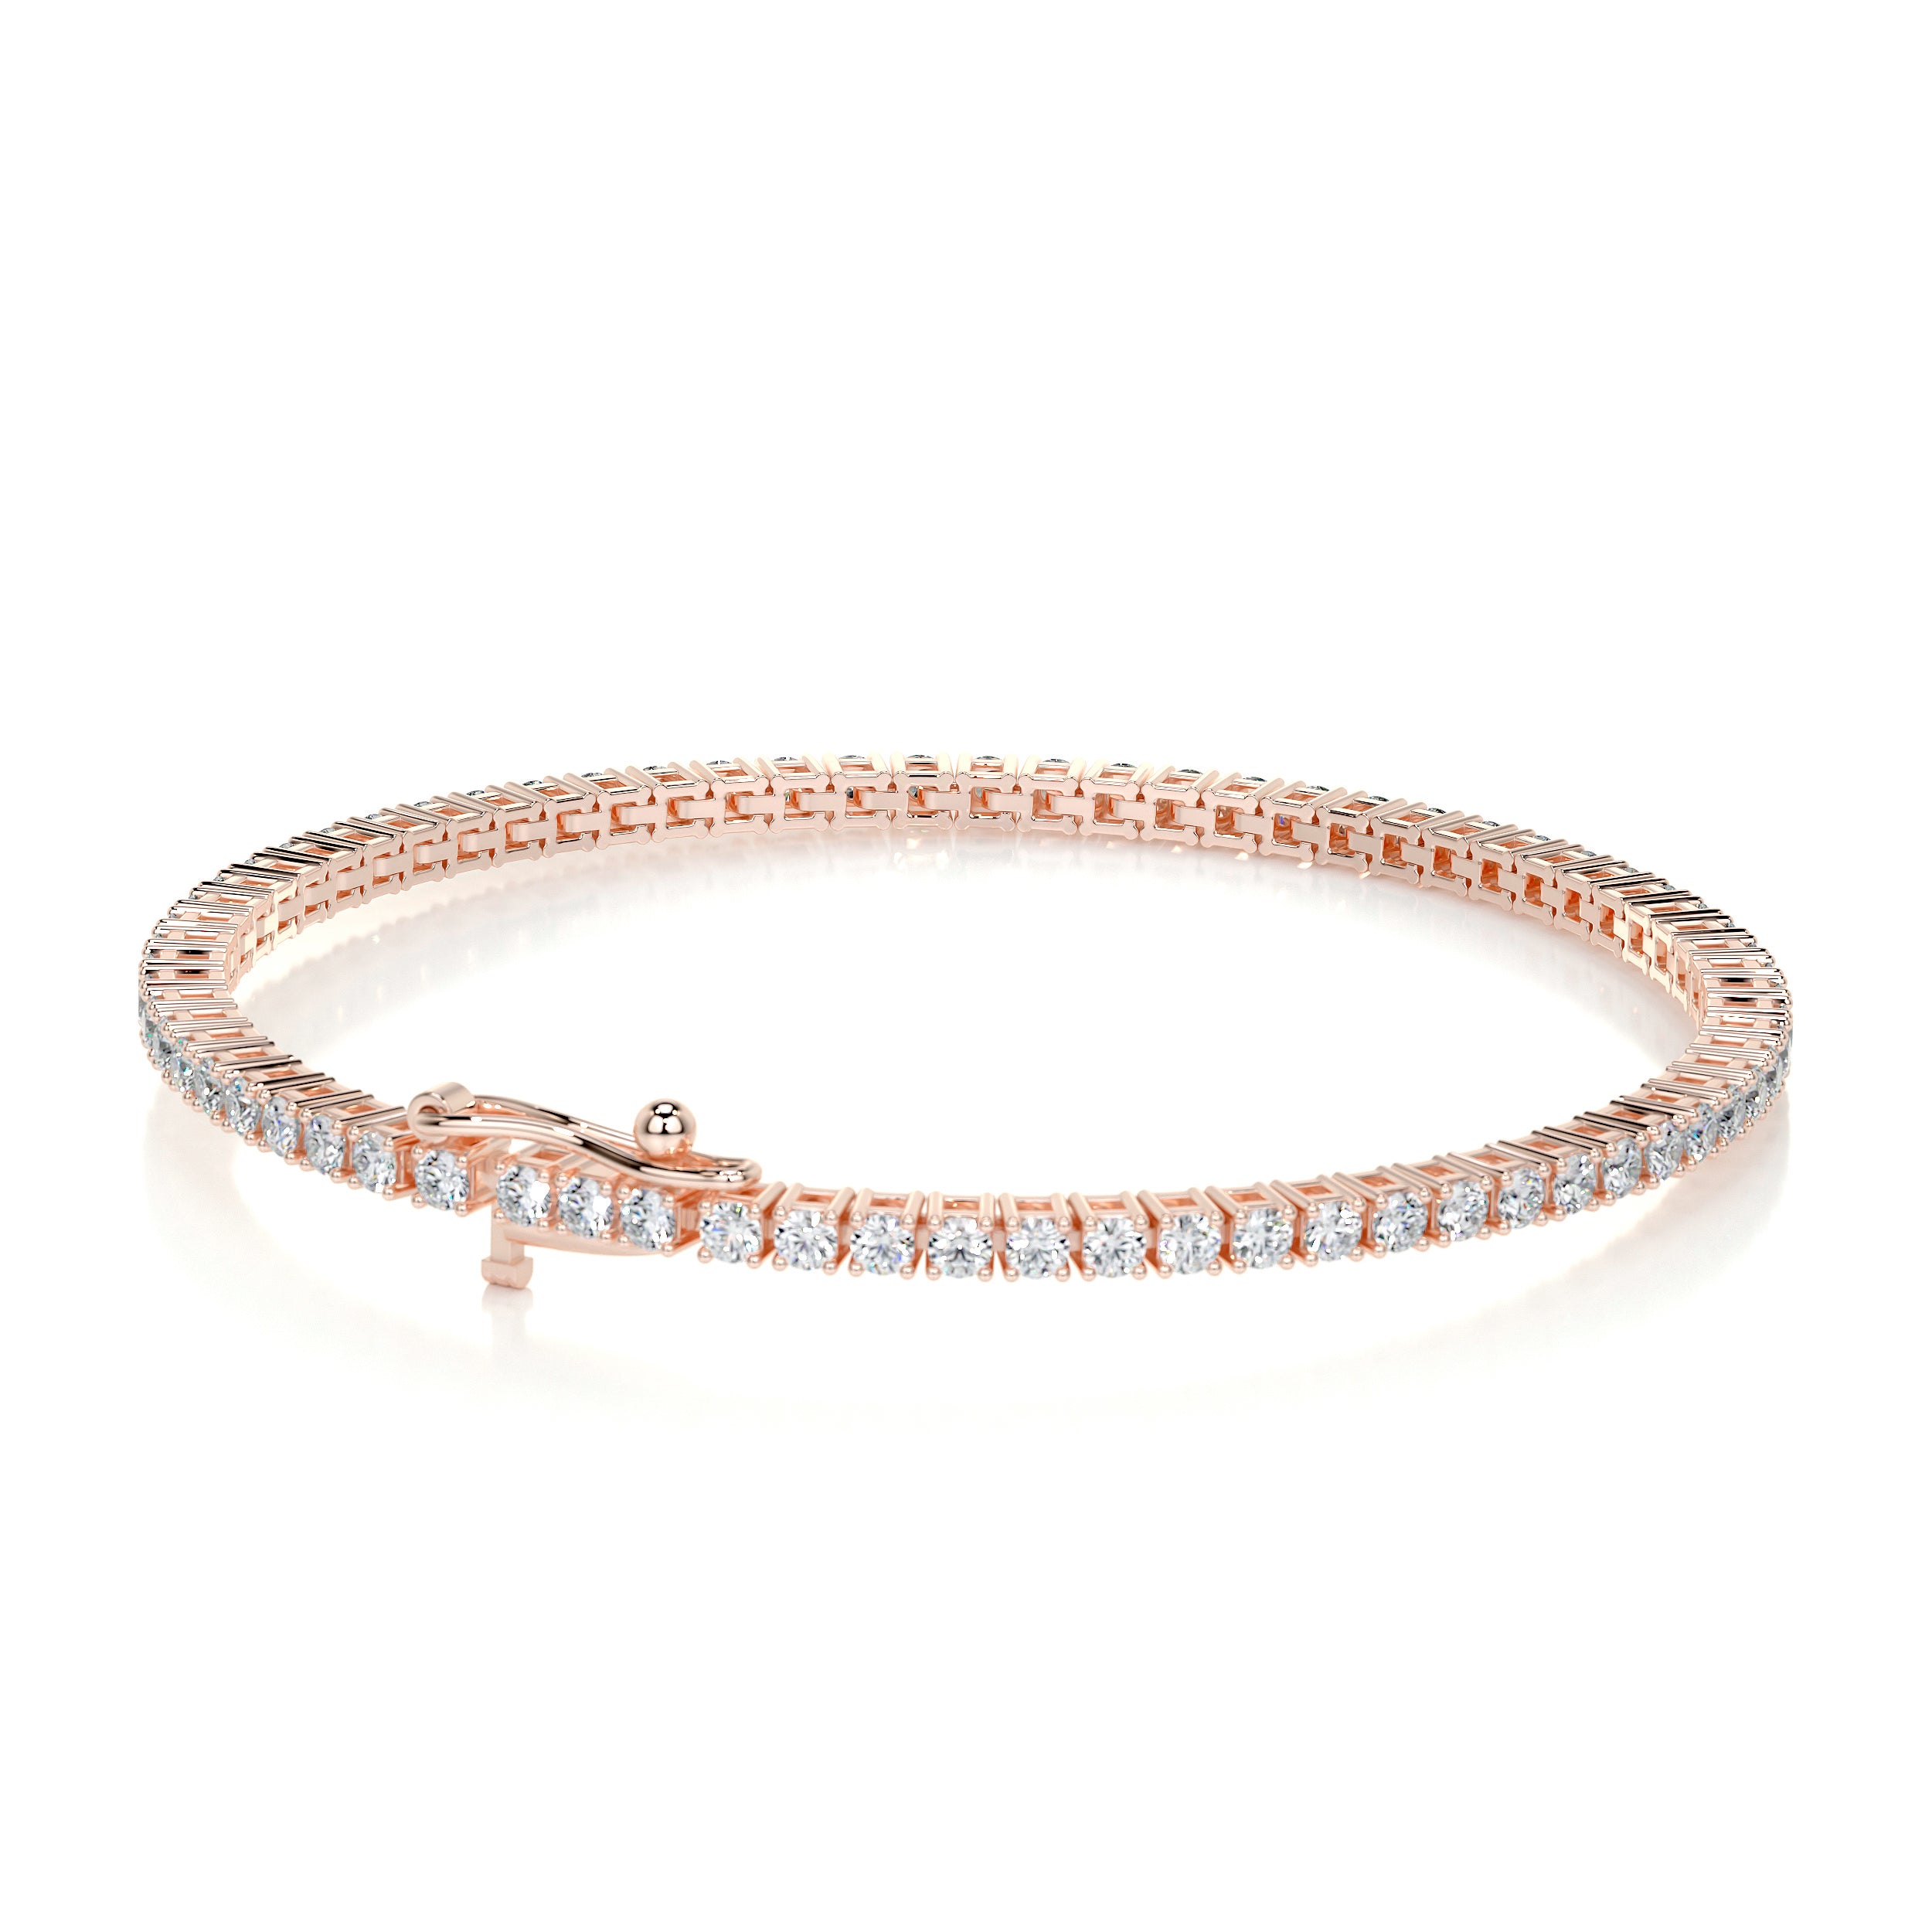 Sidney Tennis Lab Grown Diamonds Bracelet   (2.5 Carat) -14K Rose Gold